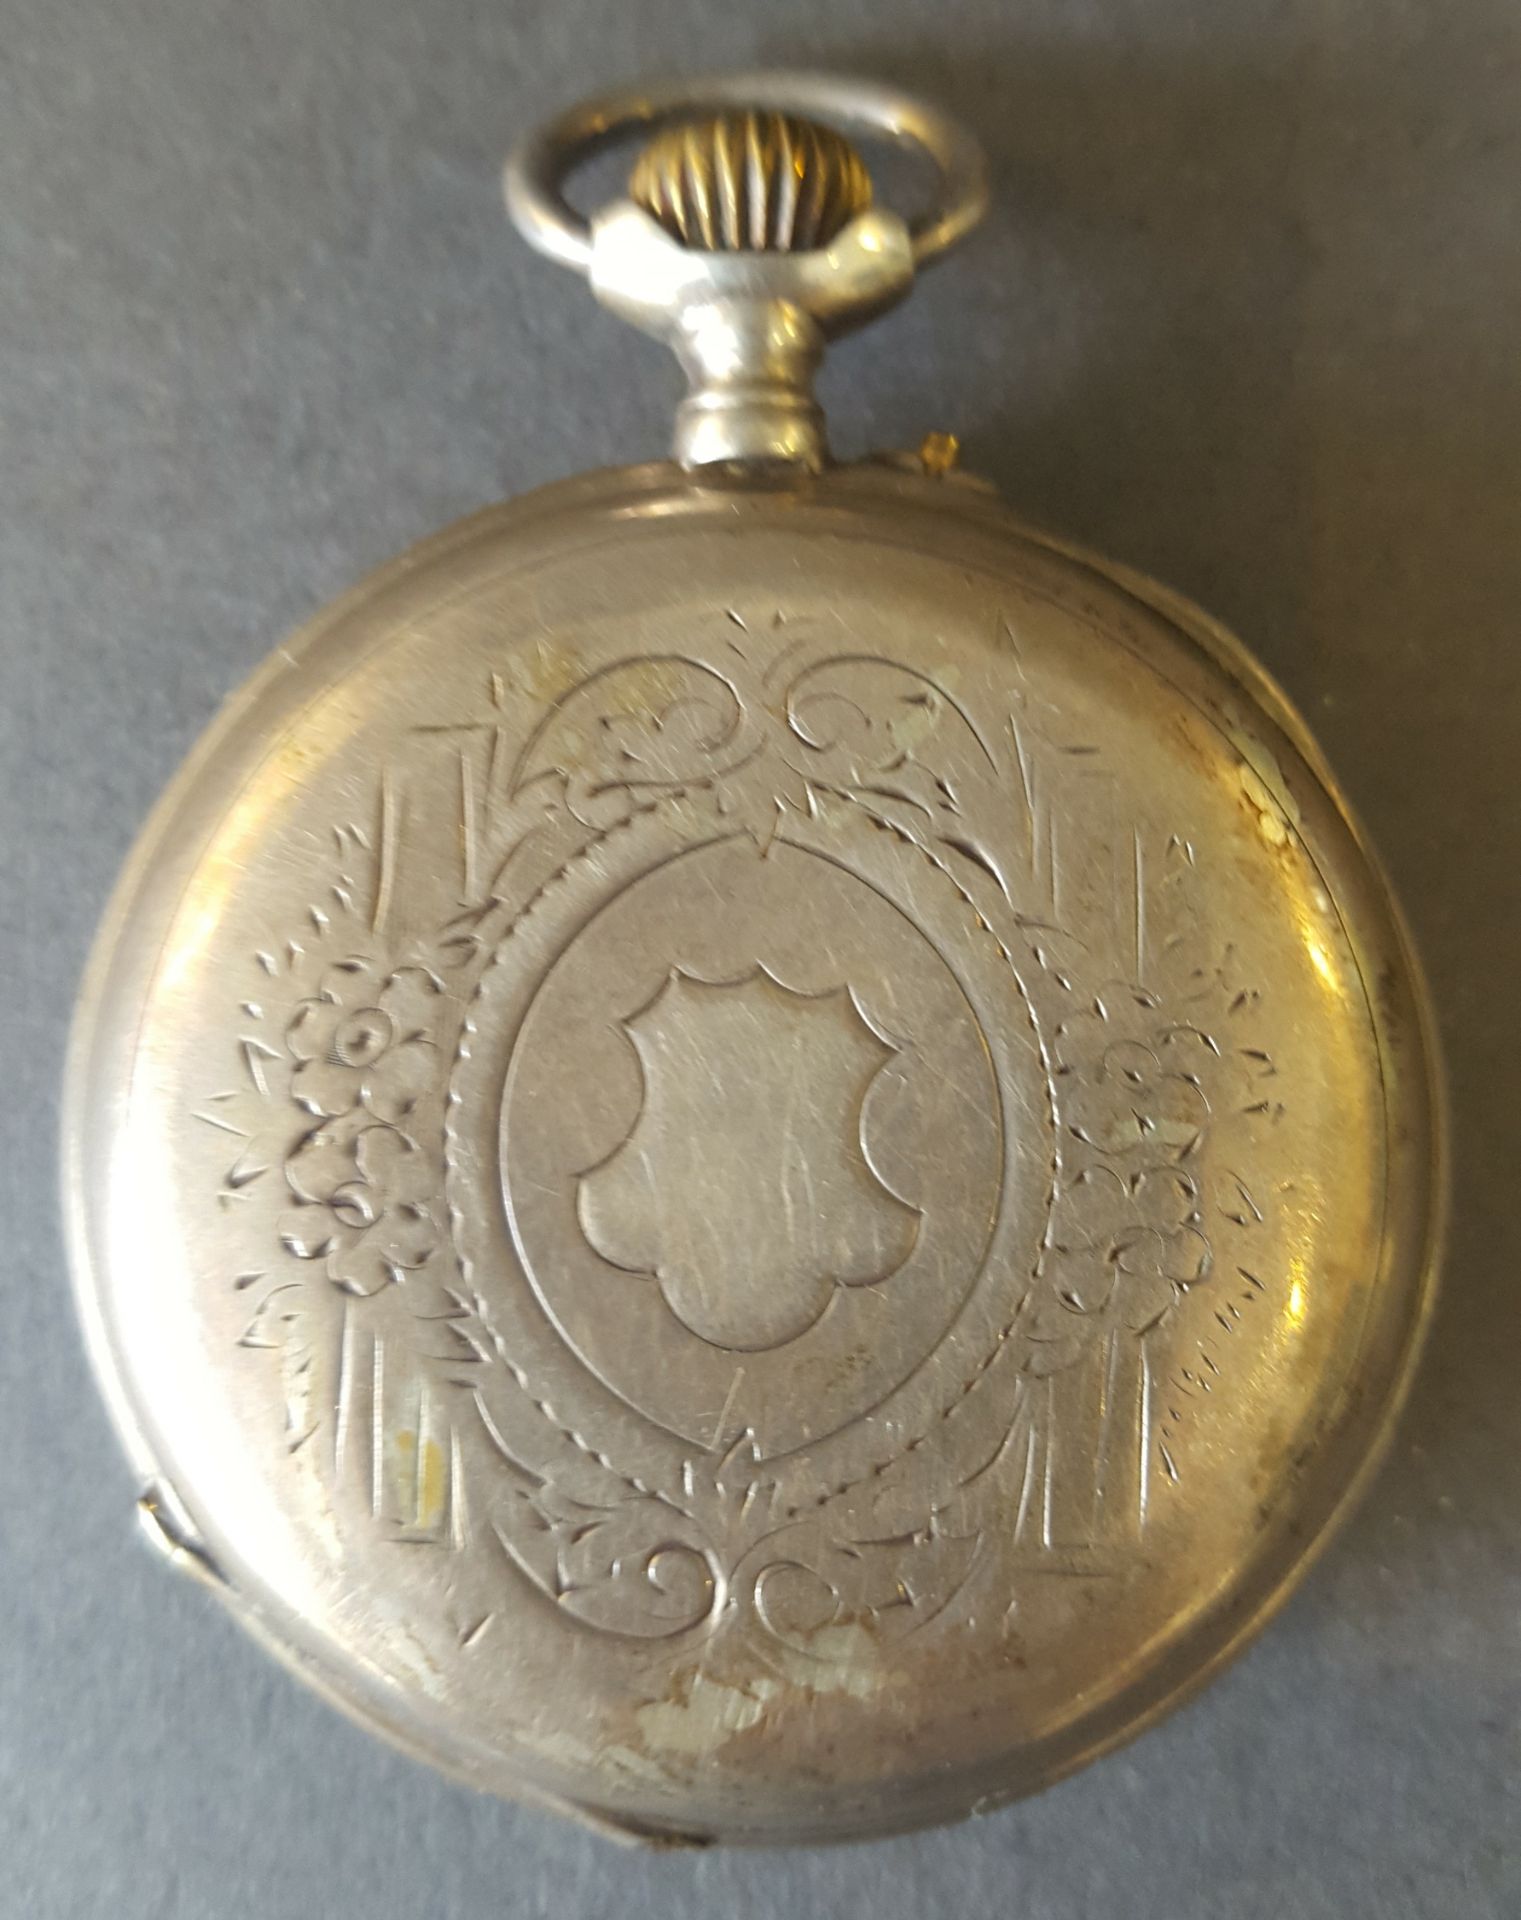 Antique Vintage French Continetal Silver Remontoir & Rubis Pocket Watch Hallmarked 800 - Image 2 of 4